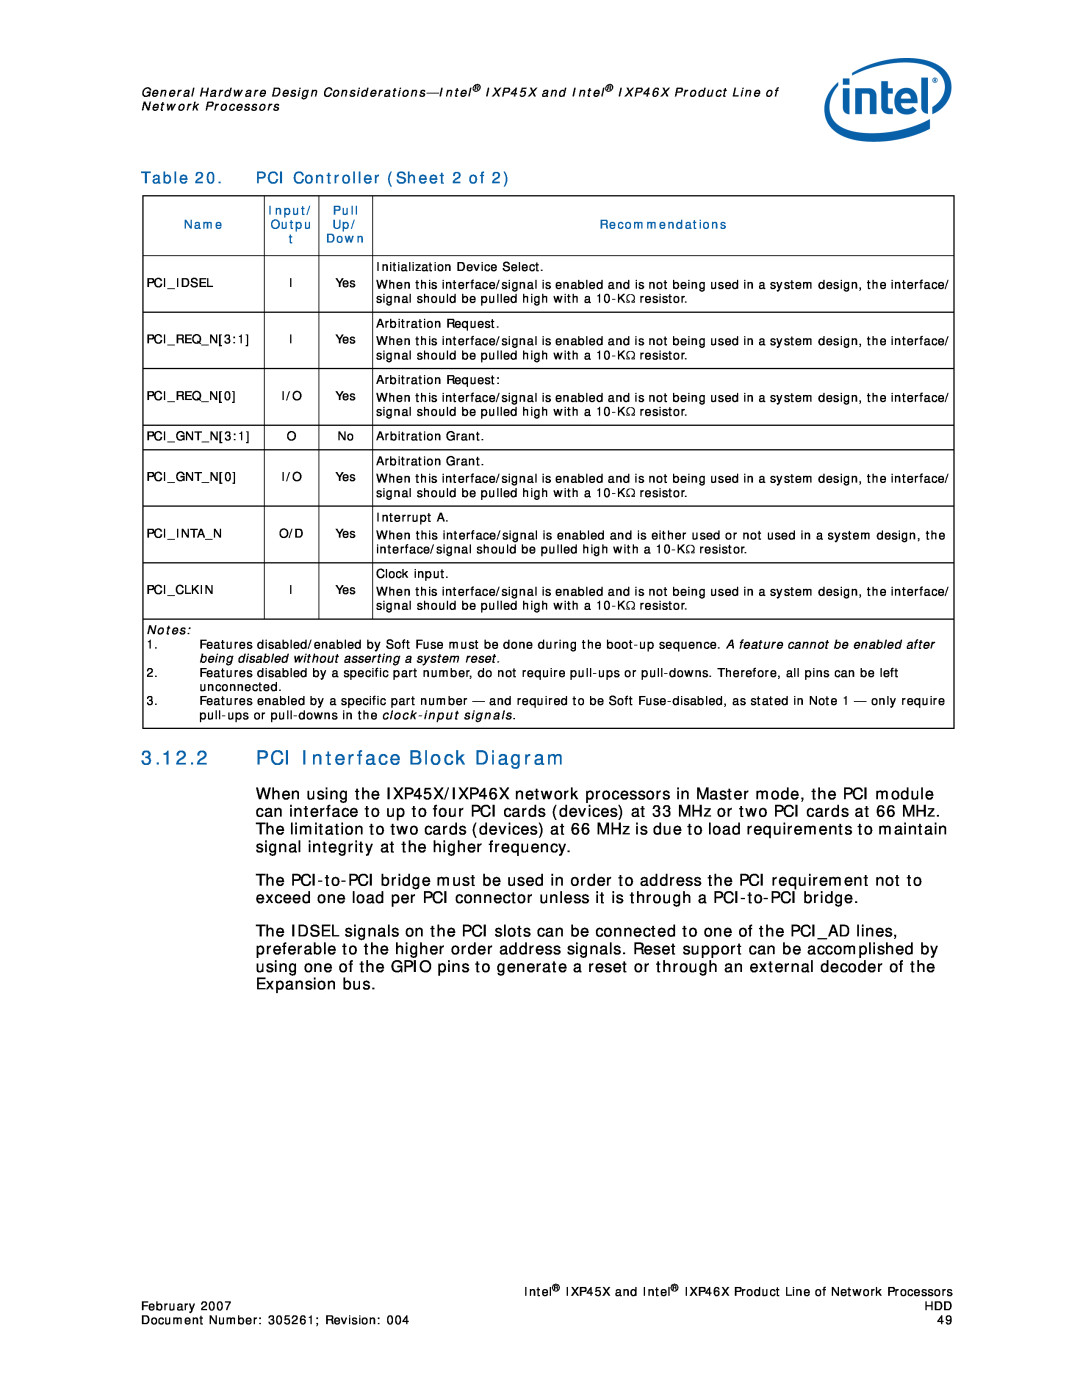 Intel IXP45X, IXP46X manual 3.12.2PCI Interface Block Diagram, PCI Controller Sheet 2 of 